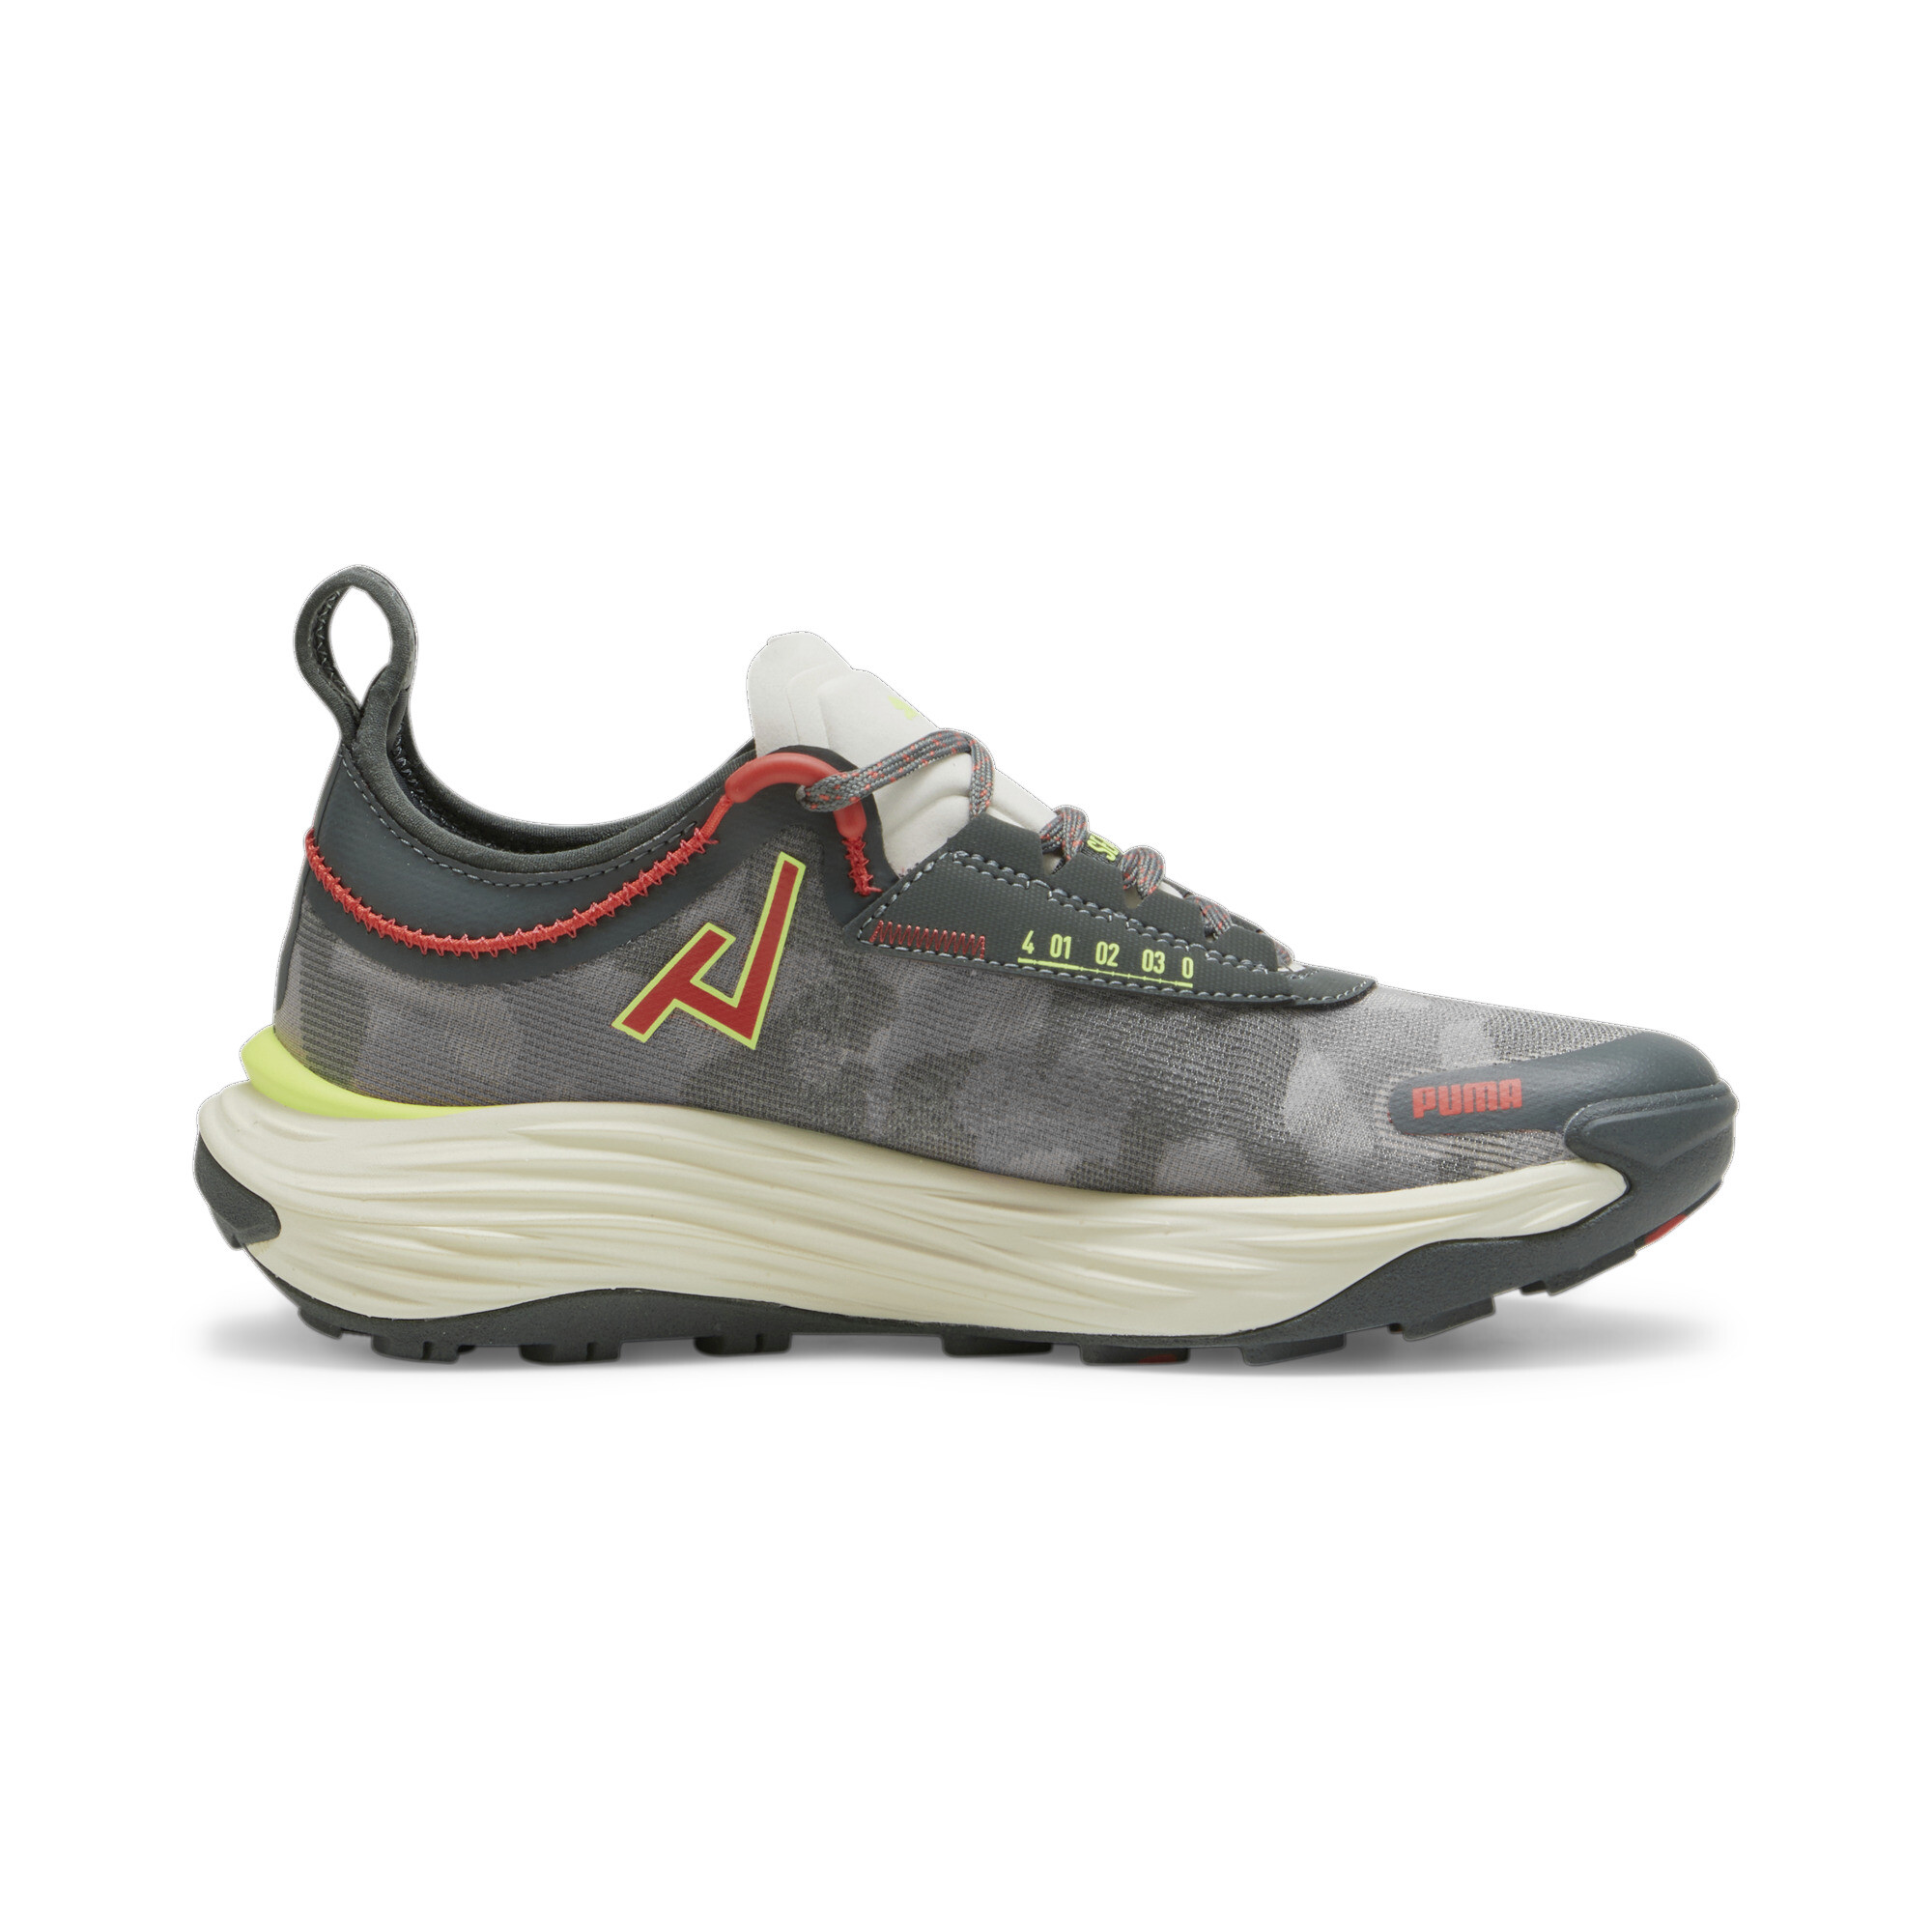 Women's PUMA Voyage NITROâ¢ 3 Trail Running Shoes In Gray, Size EU 40.5